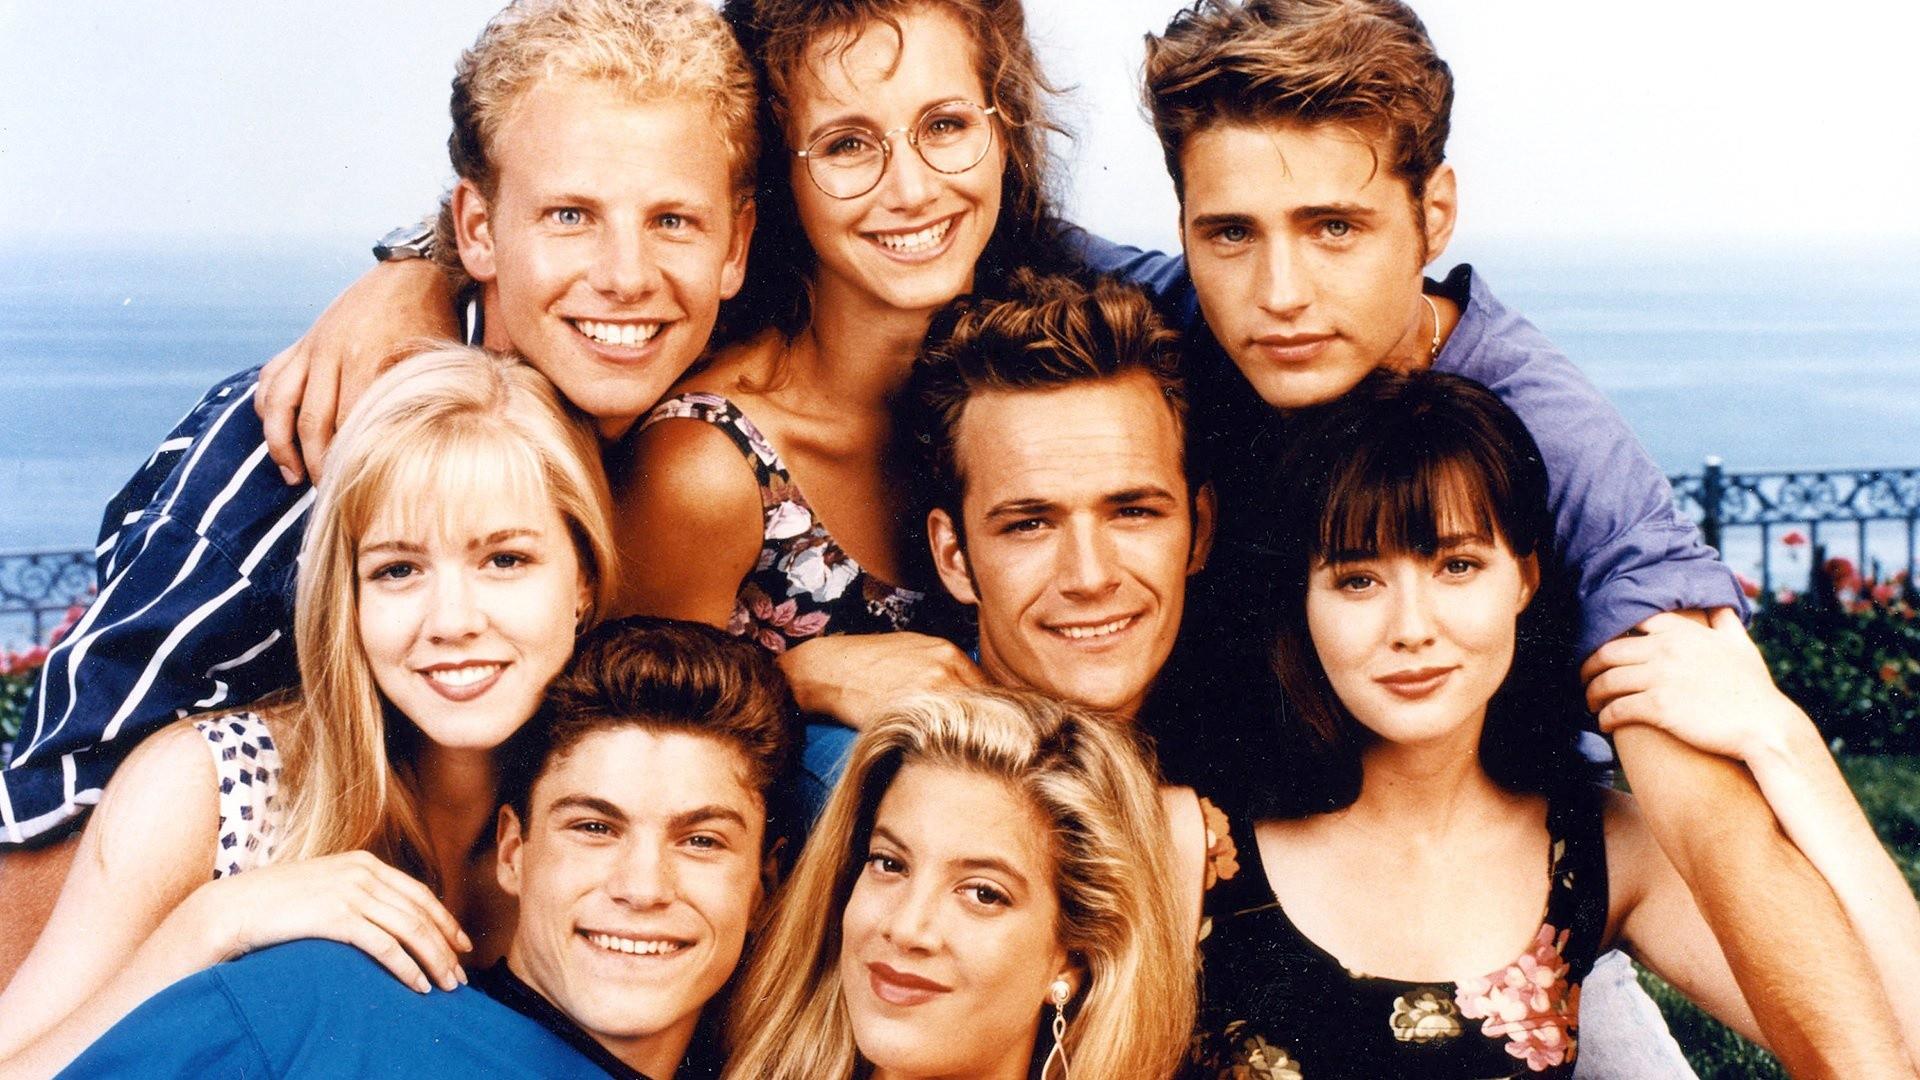 Беверли-Хиллз 90210 – 1 сезон 17 серия «Вставай и доставляй» / Beverly Hills, 90210